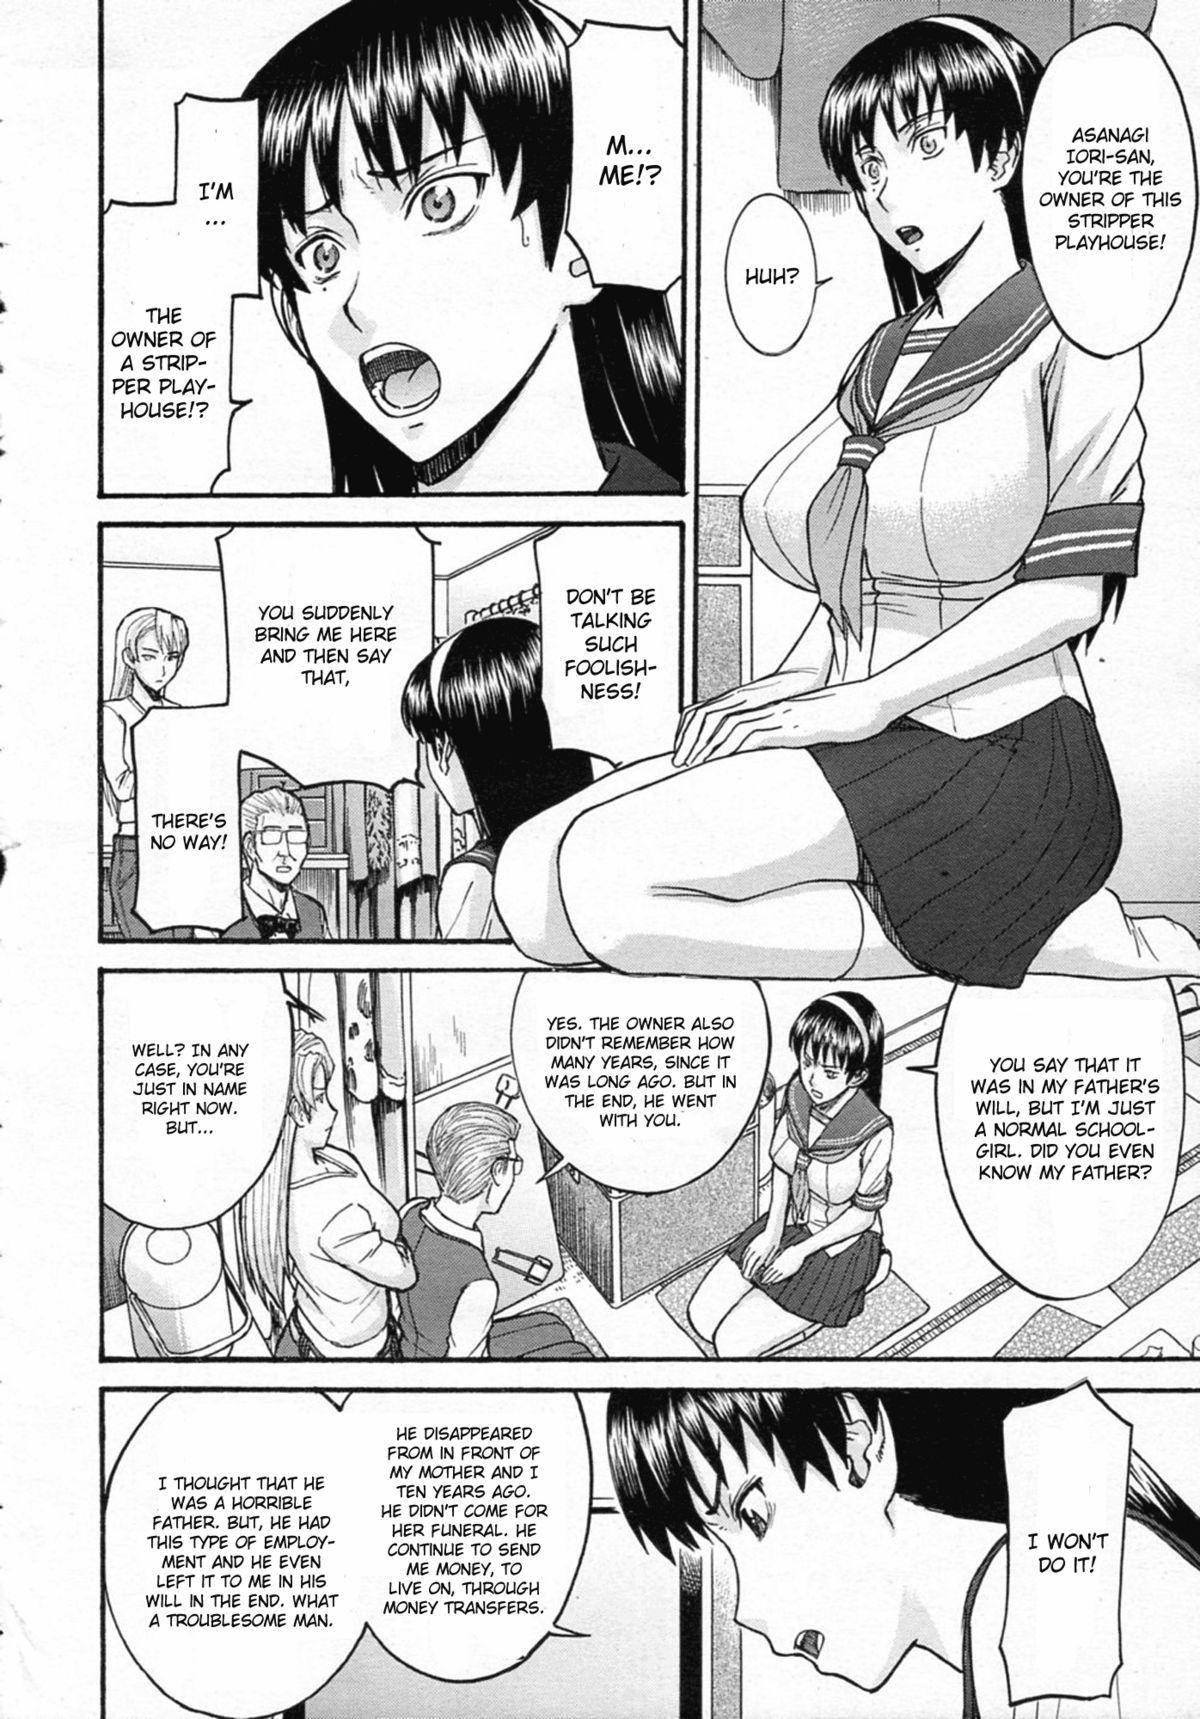 Sailor Fuku to Strip Chapter 1 5